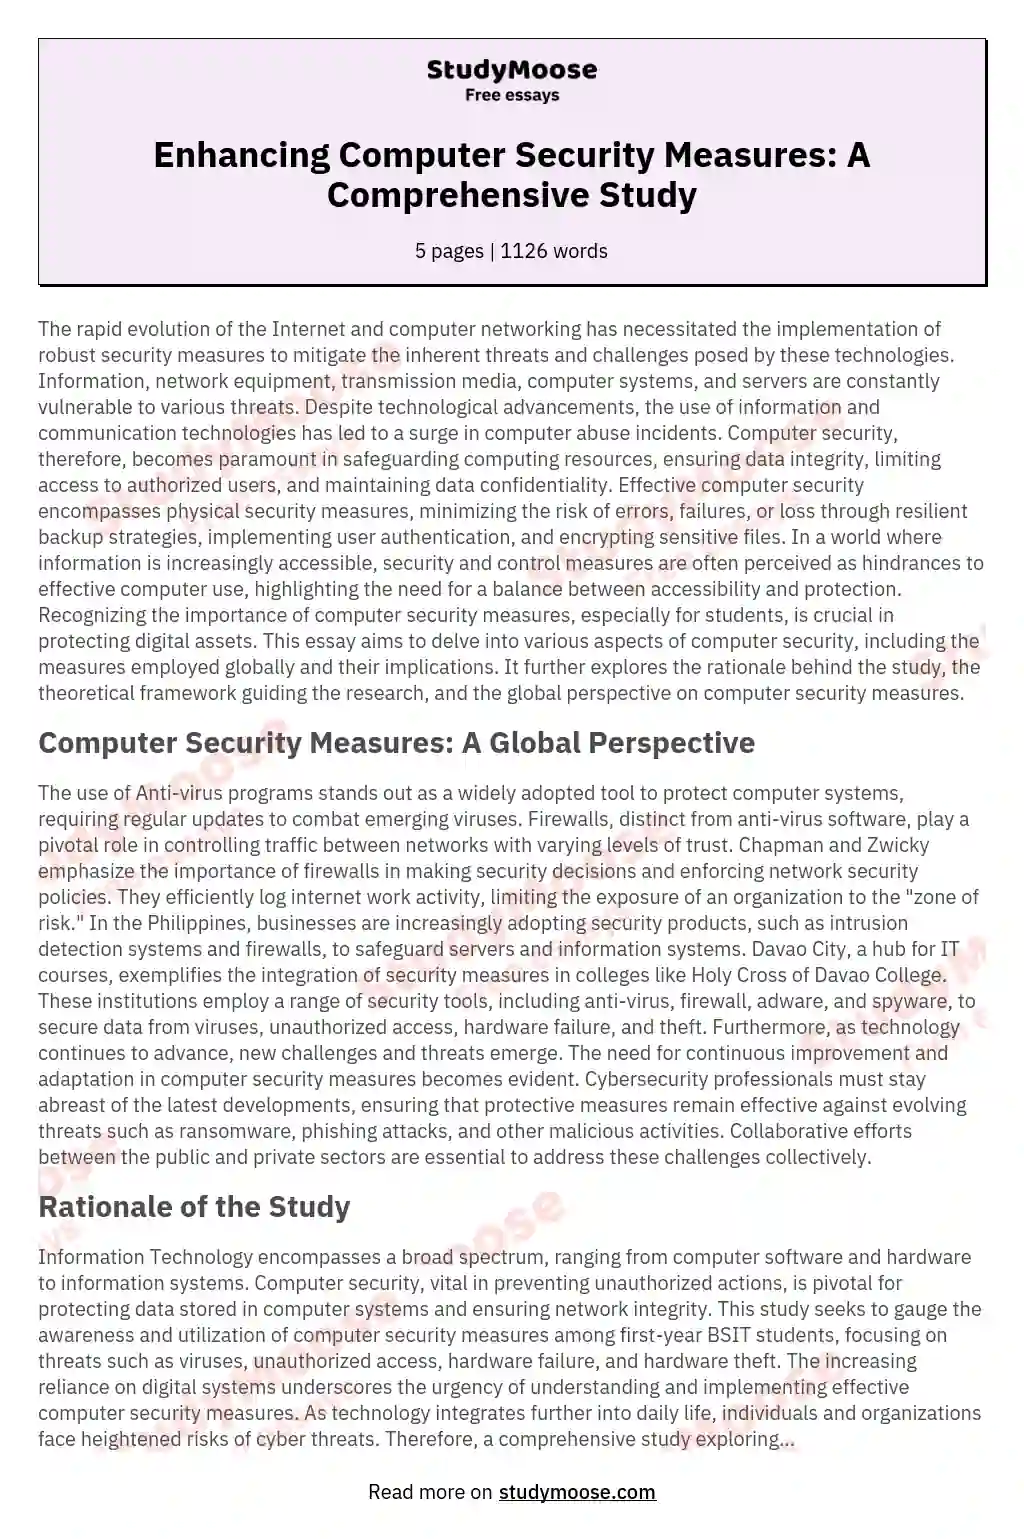 Enhancing Computer Security Measures: A Comprehensive Study essay